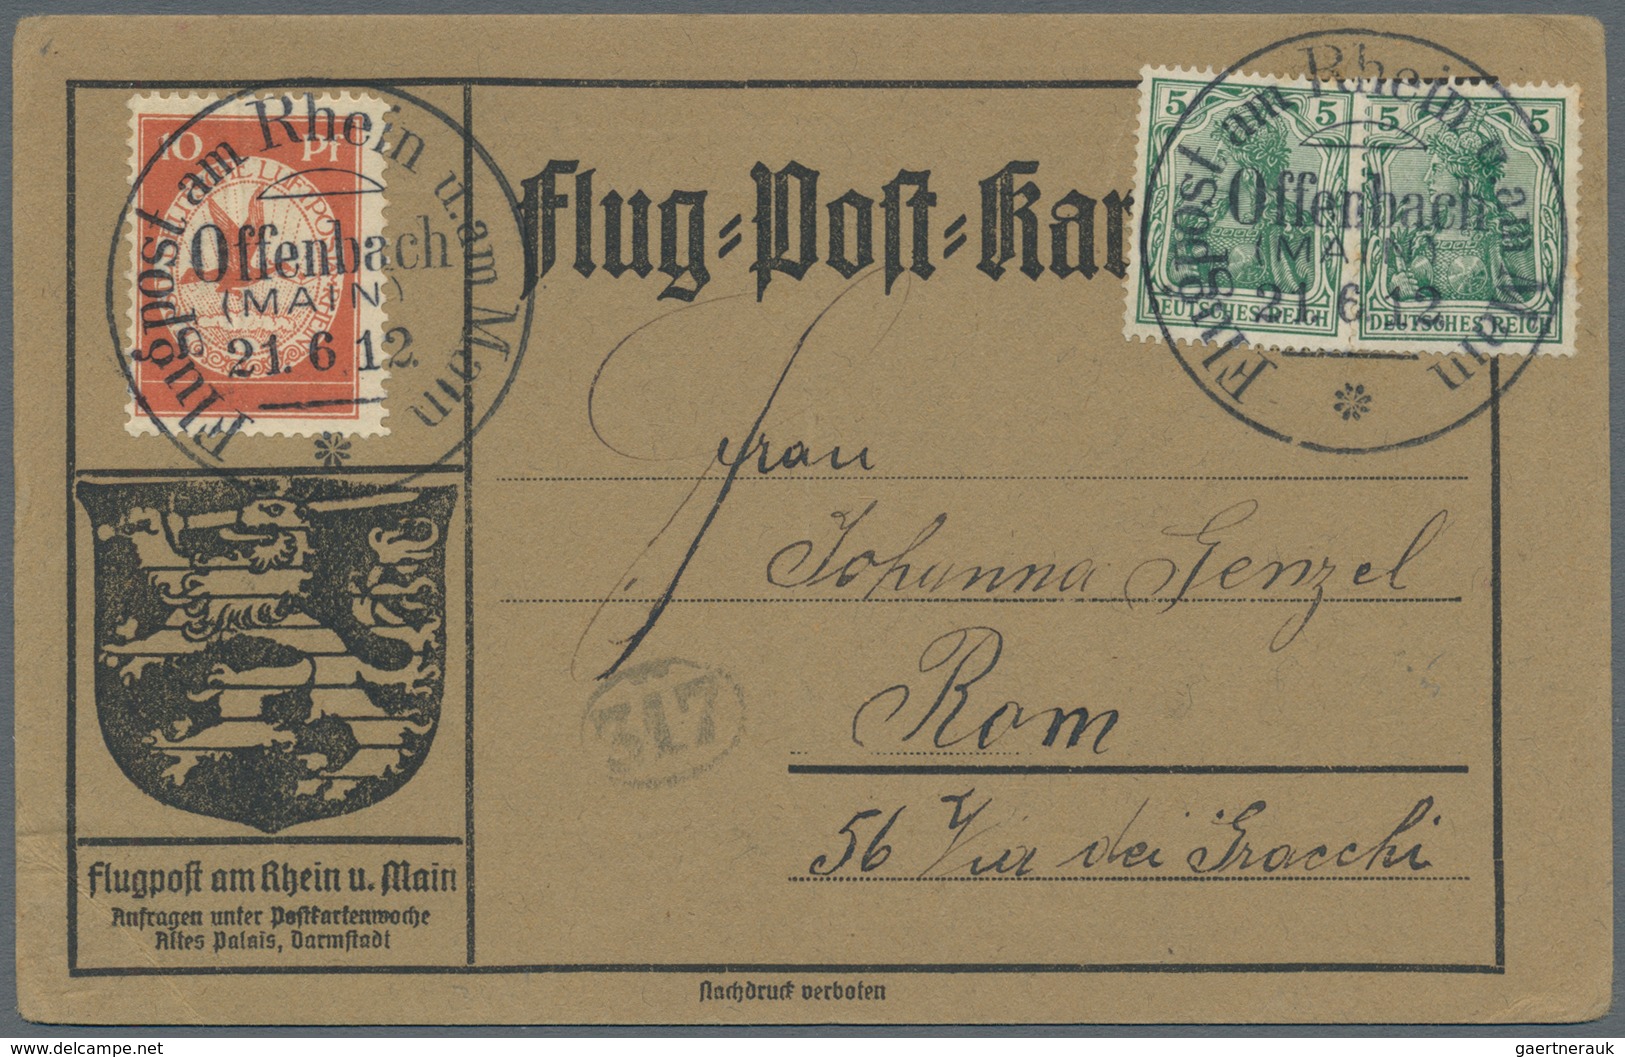 Flugpost Deutschland: 1912. Germany Official Card From The Grand Duchess Of Hesse's 1912 Flight Week - Luchtpost & Zeppelin